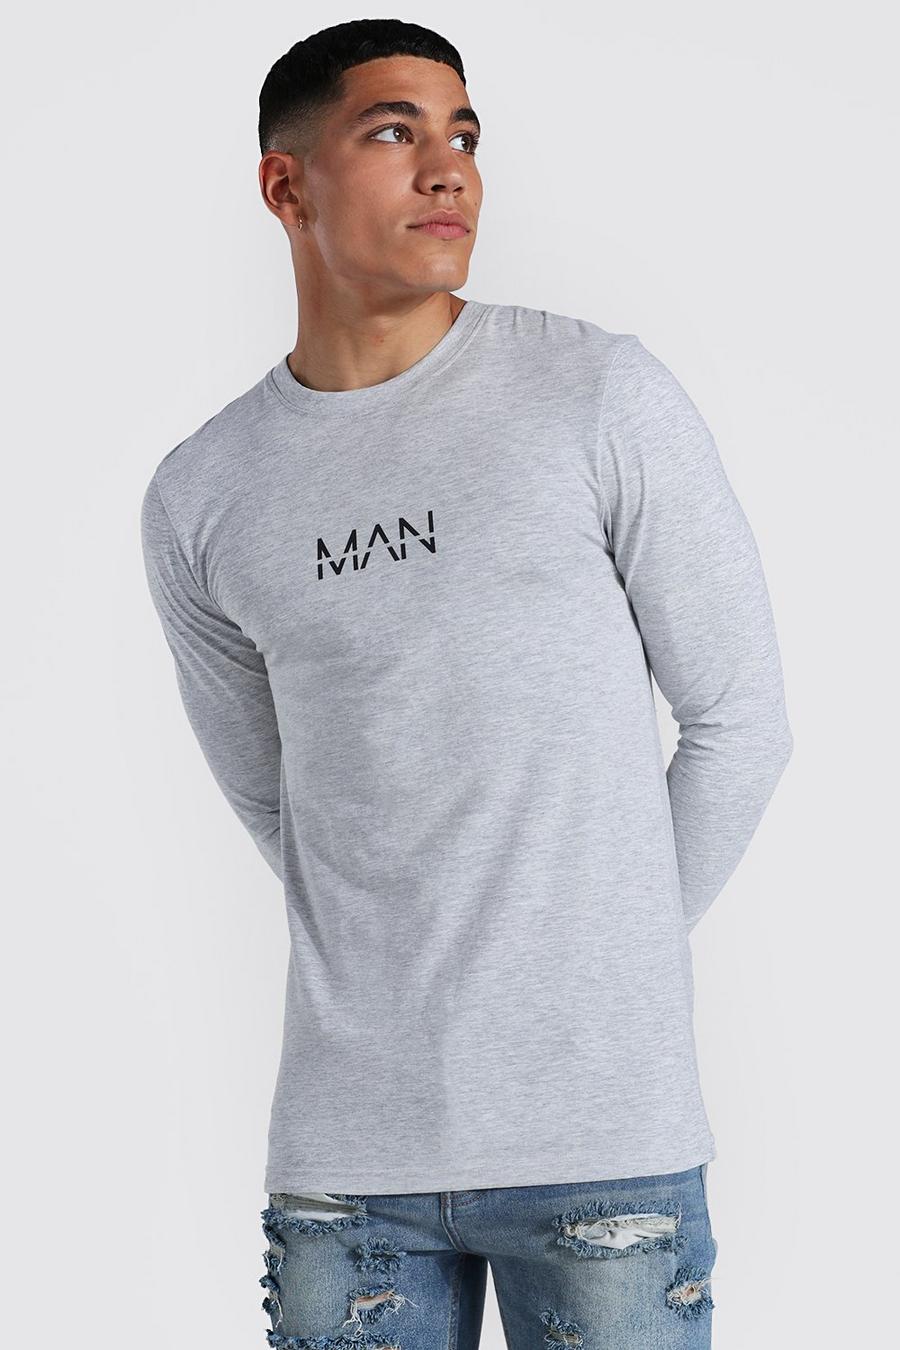 Camiseta MAN Original ajustada al músculo de manga larga, Grey marl image number 1